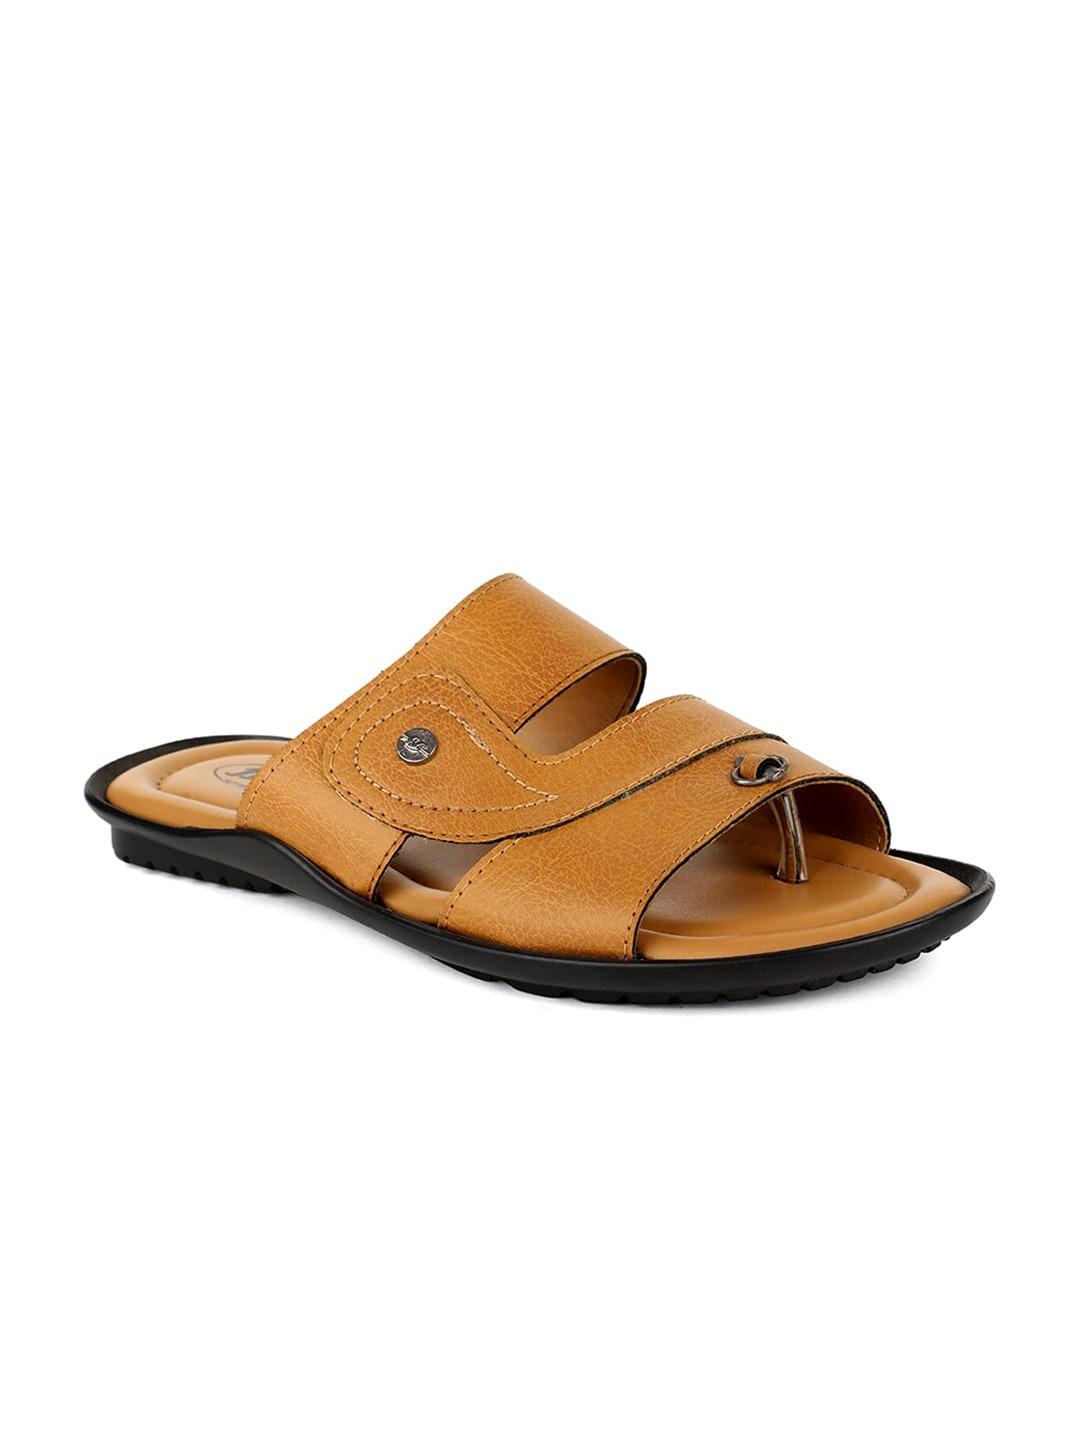 Bata Men Tan & Black Ethnic Comfort Sandals